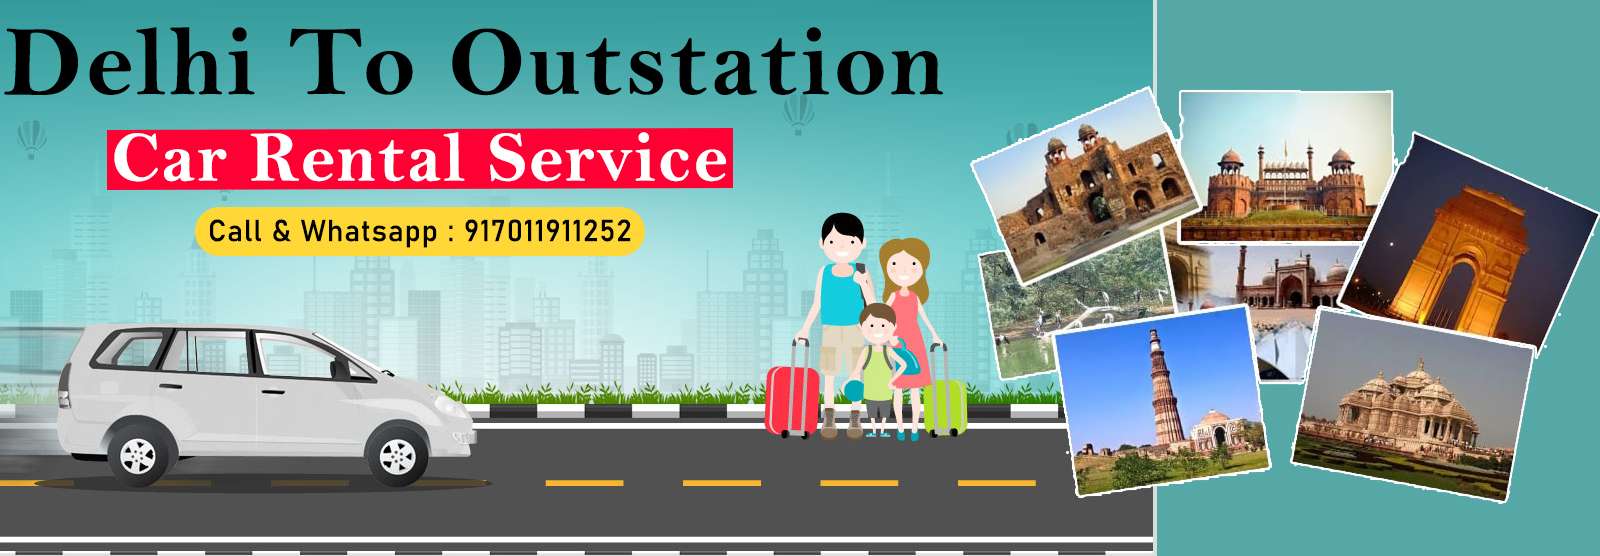 Car rental service in Delhi